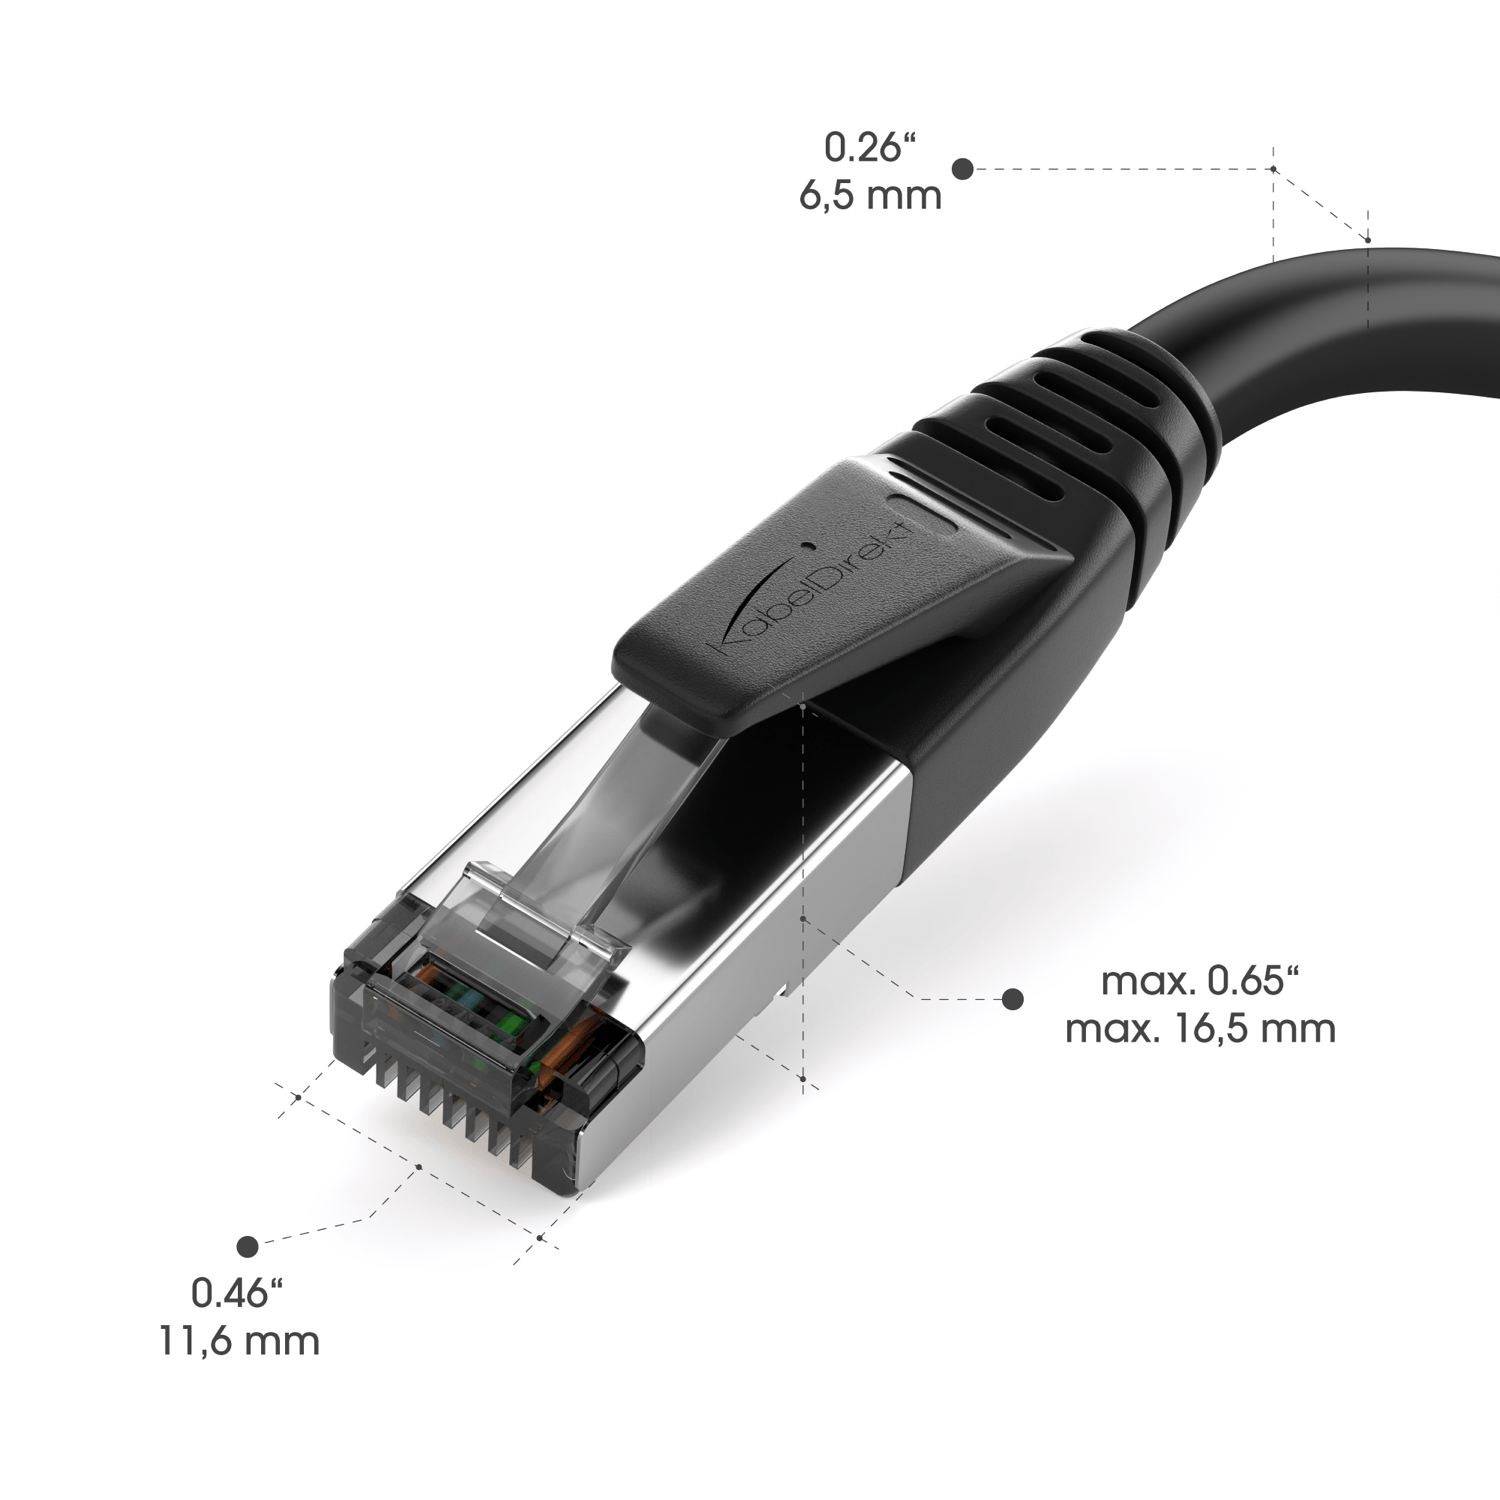 Cat 8 Netzwerkkabel – 40 Gbit/s Ethernet, LAN & Patch Kabel